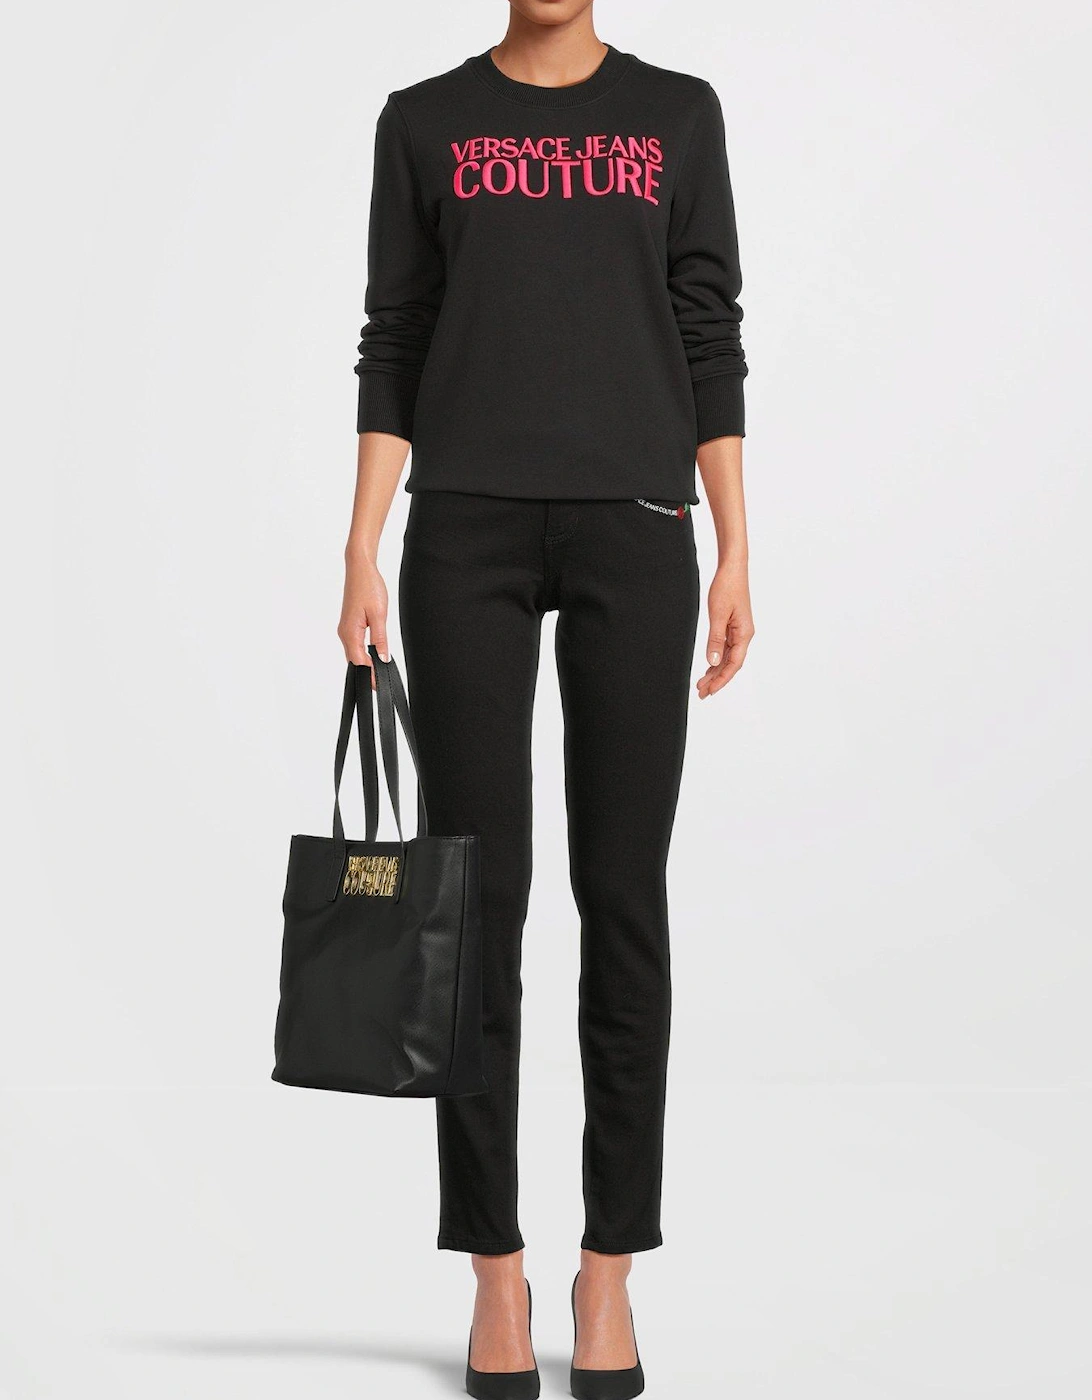 Jeans Couture Logo Sweatshirt - Black